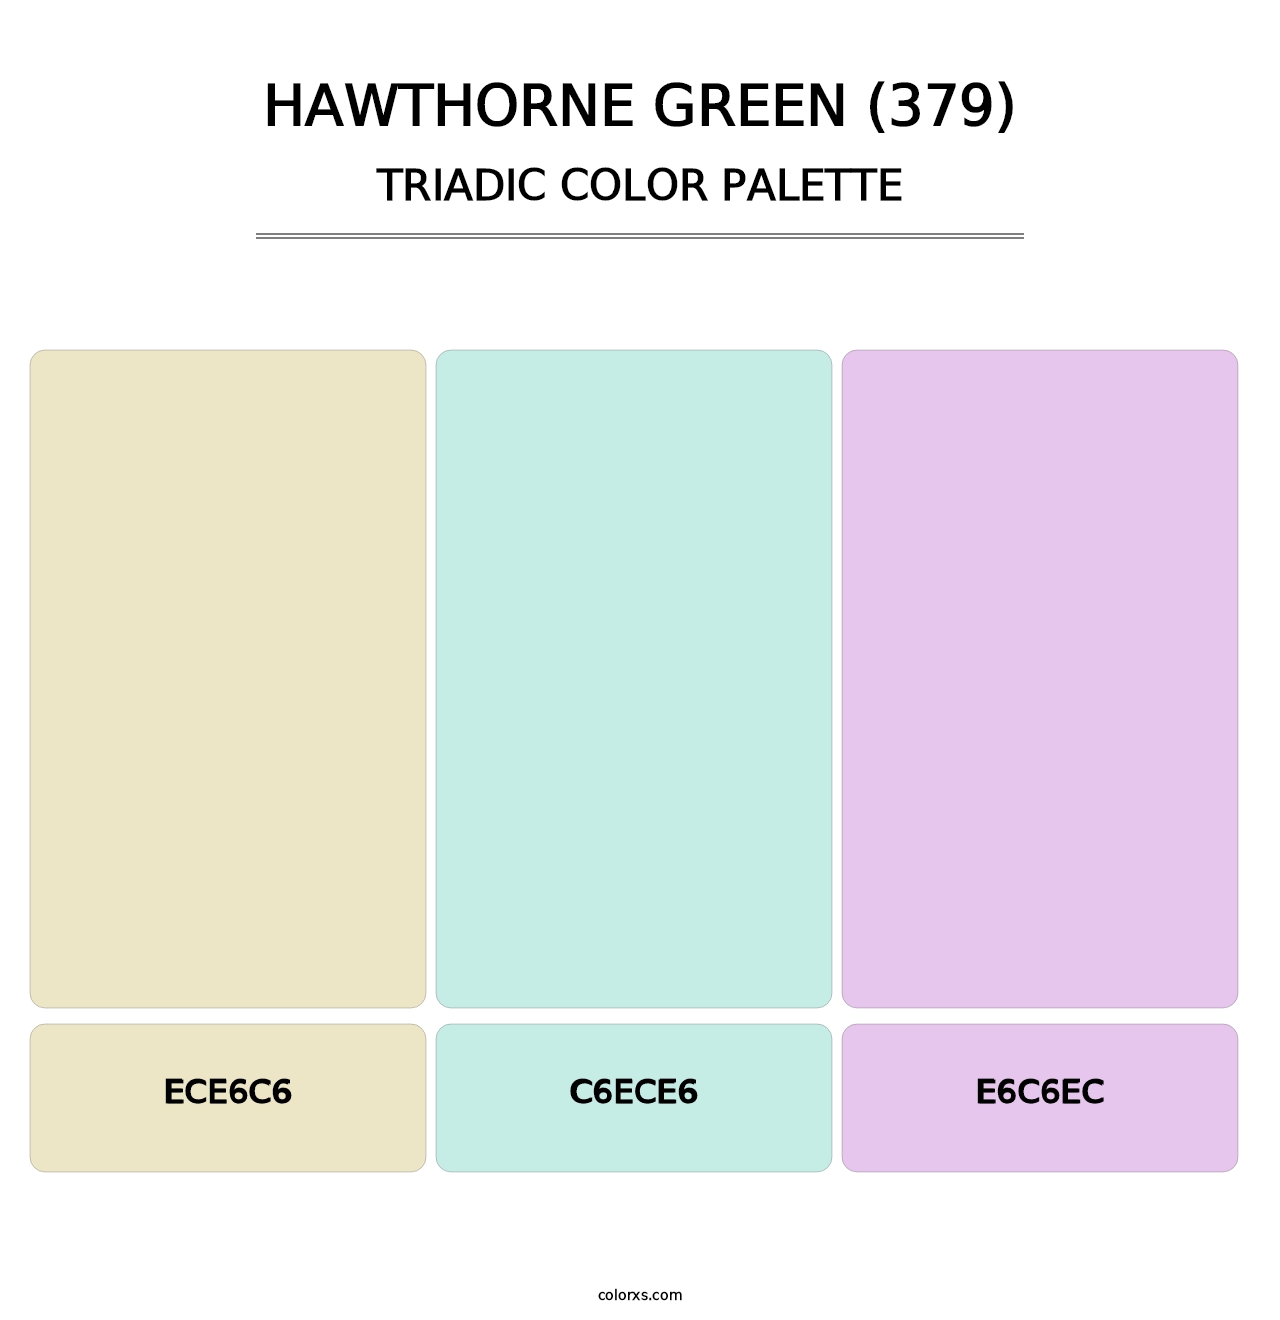 Hawthorne Green (379) - Triadic Color Palette